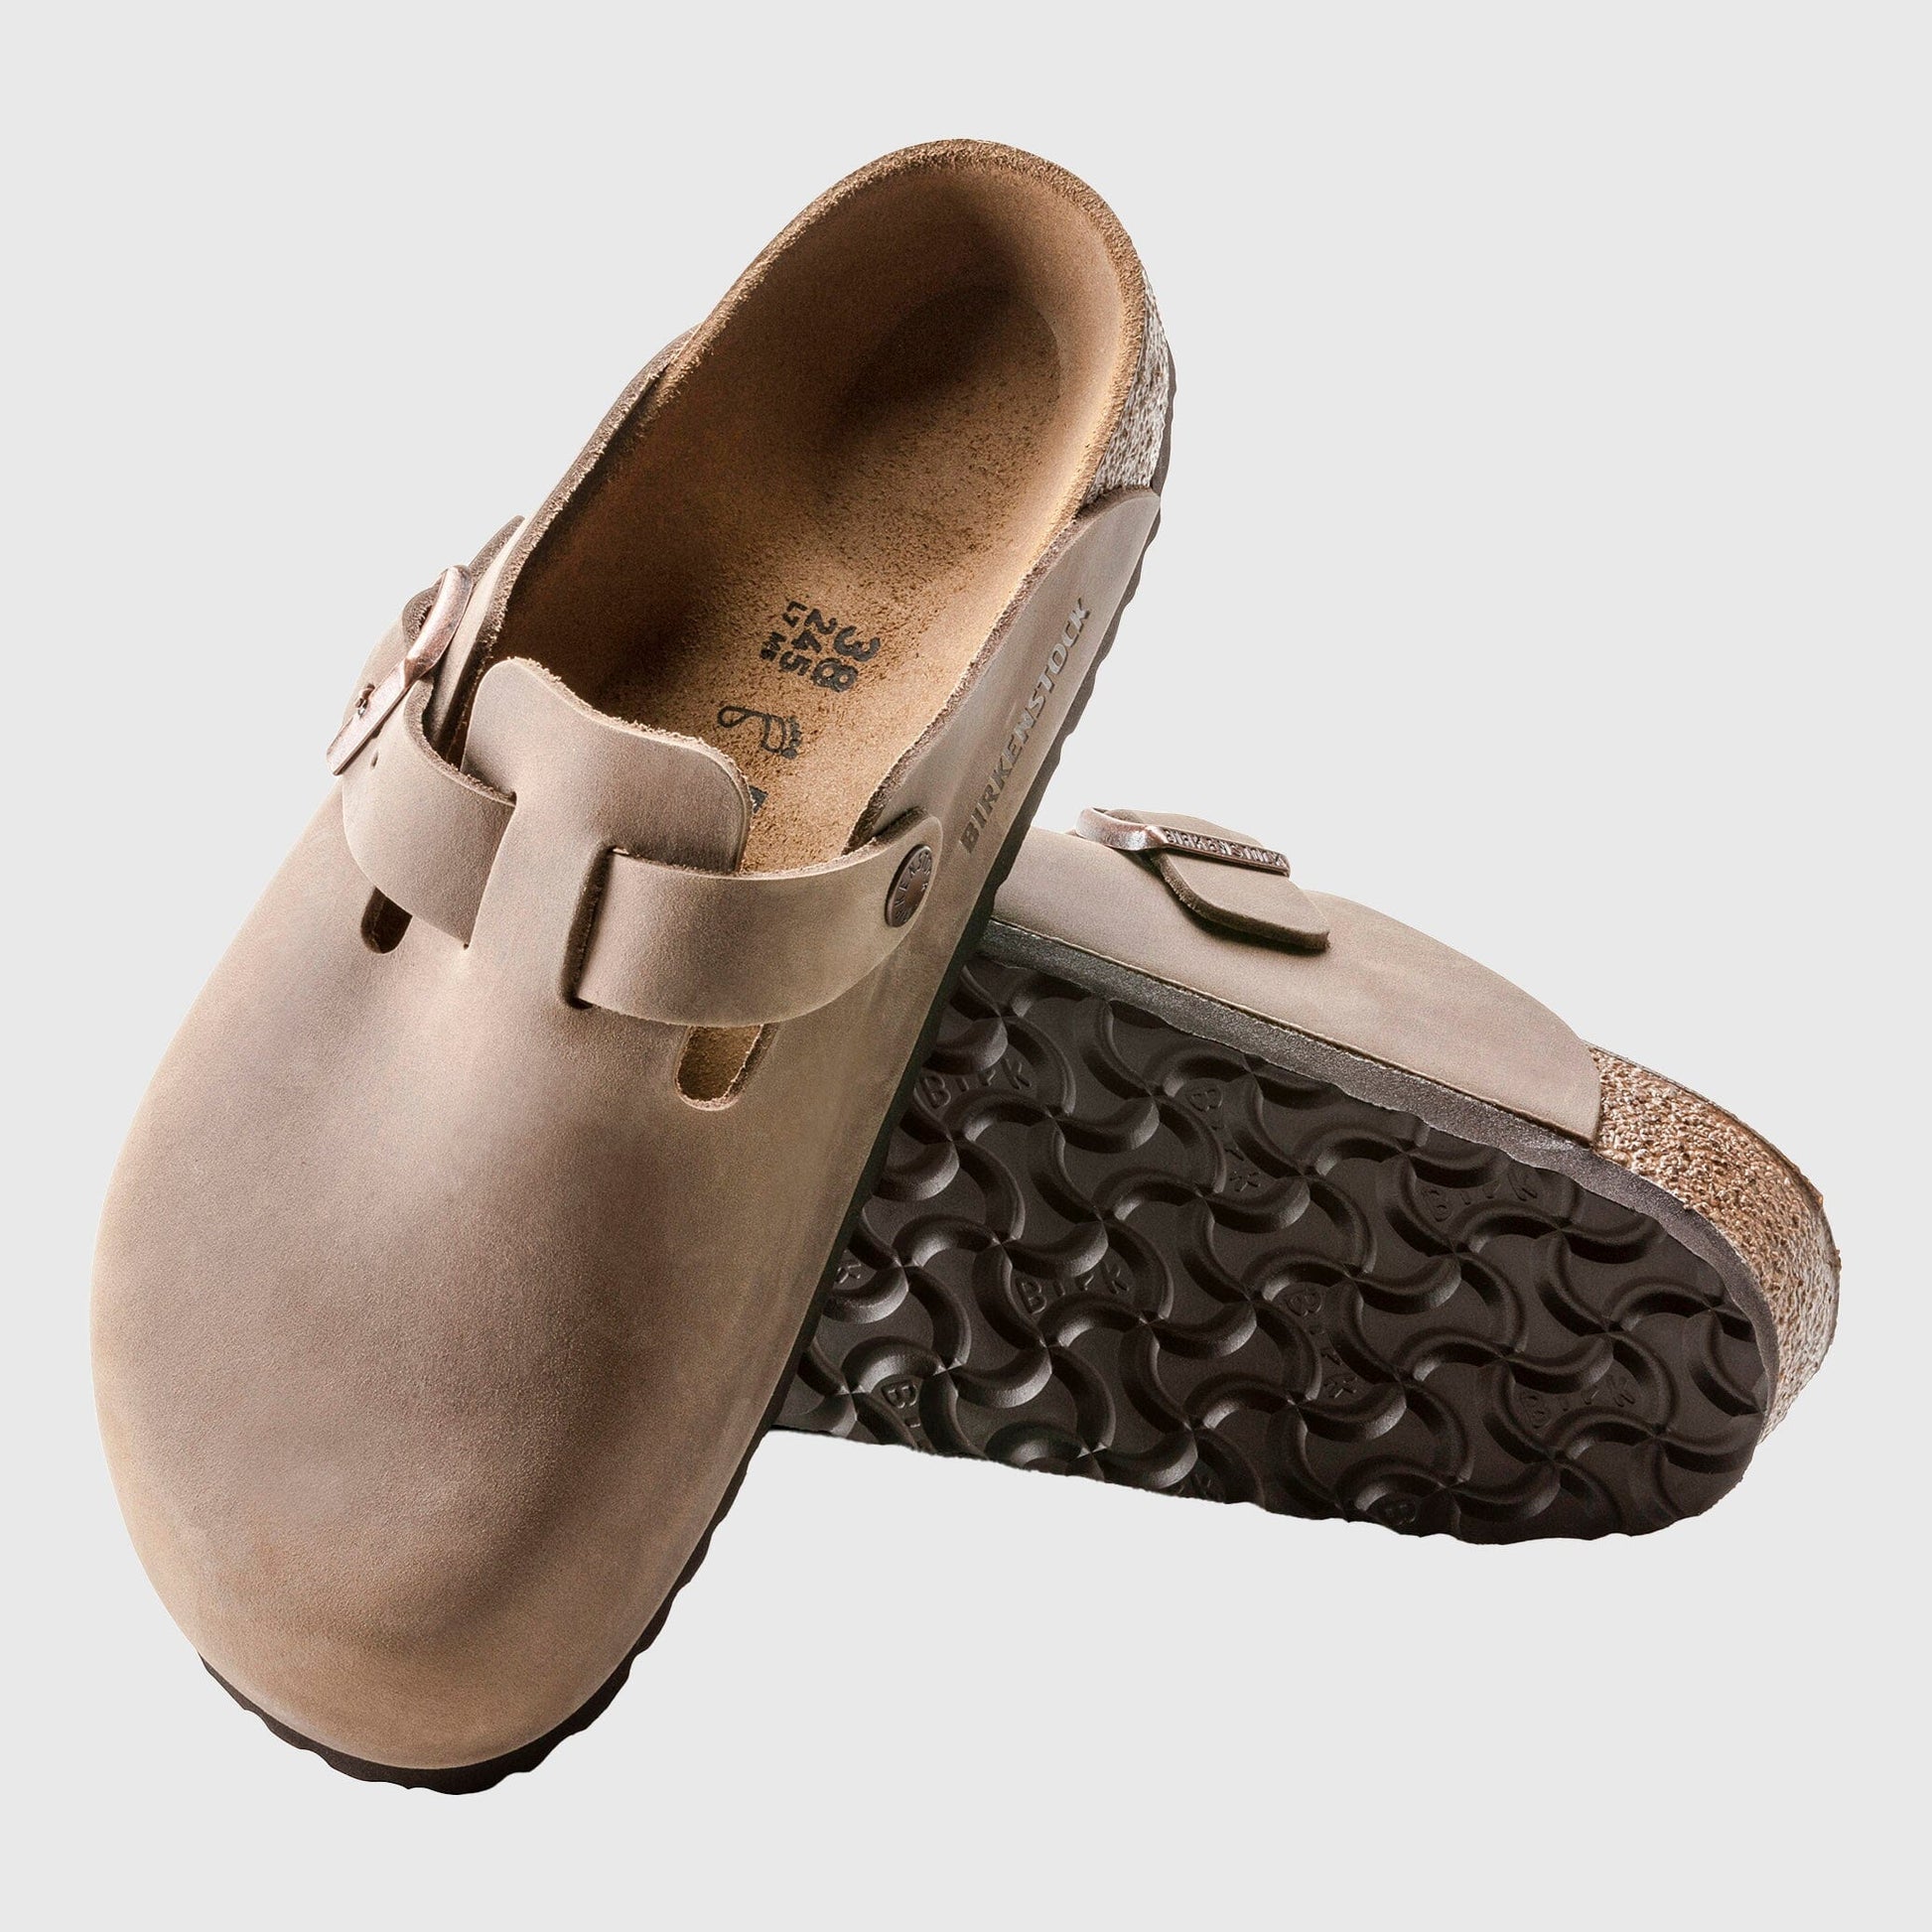 Birkenstock Boston Clog Oiled Leather - Tobacco Brown Shoes Birkenstock 